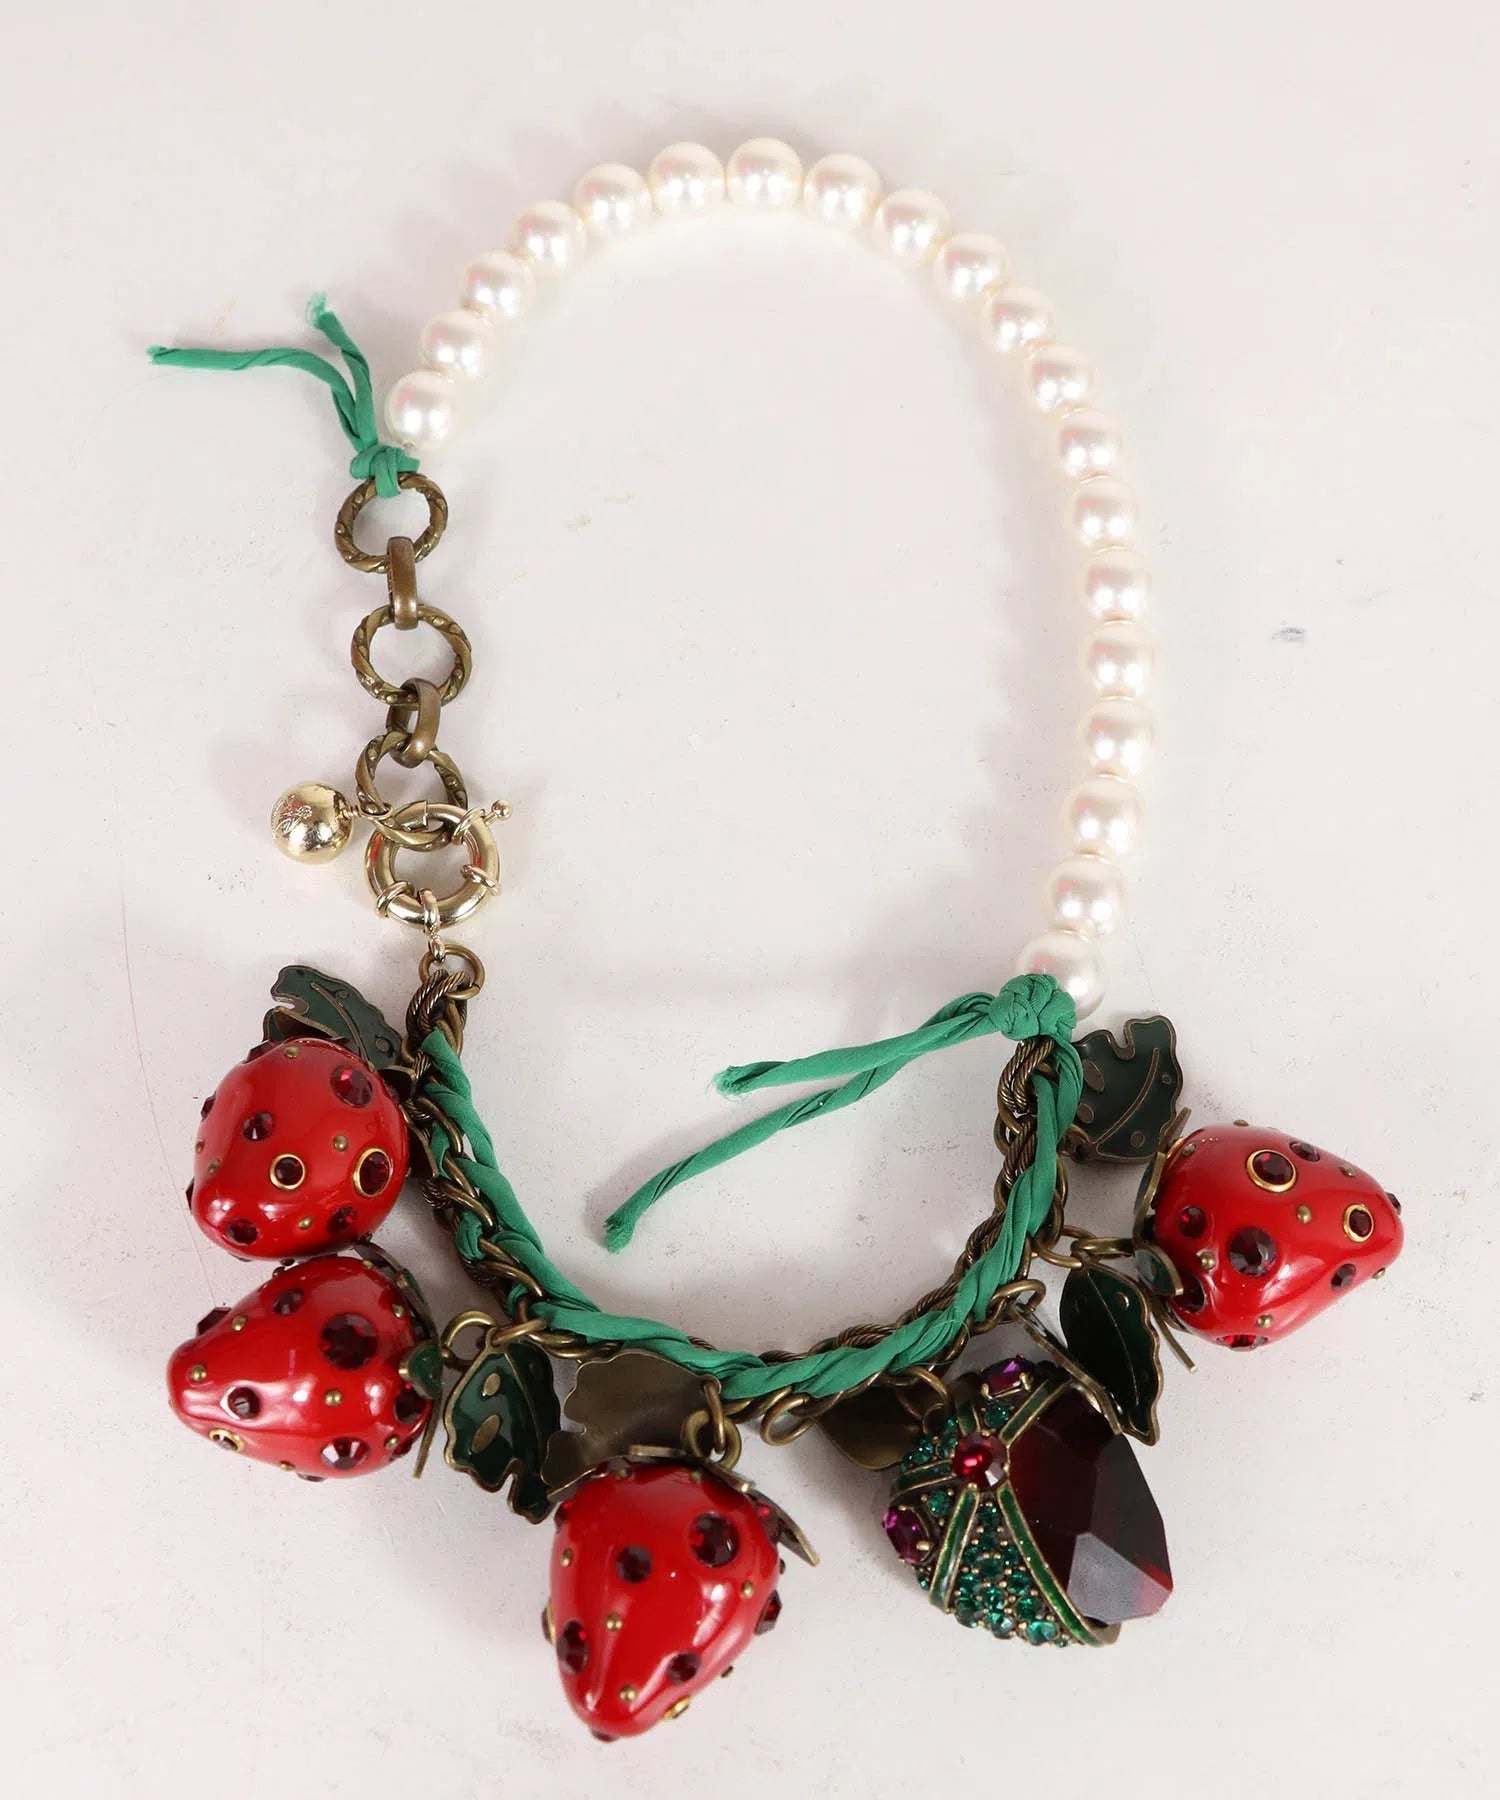 Lanvin Strawberry & Pearl Necklace